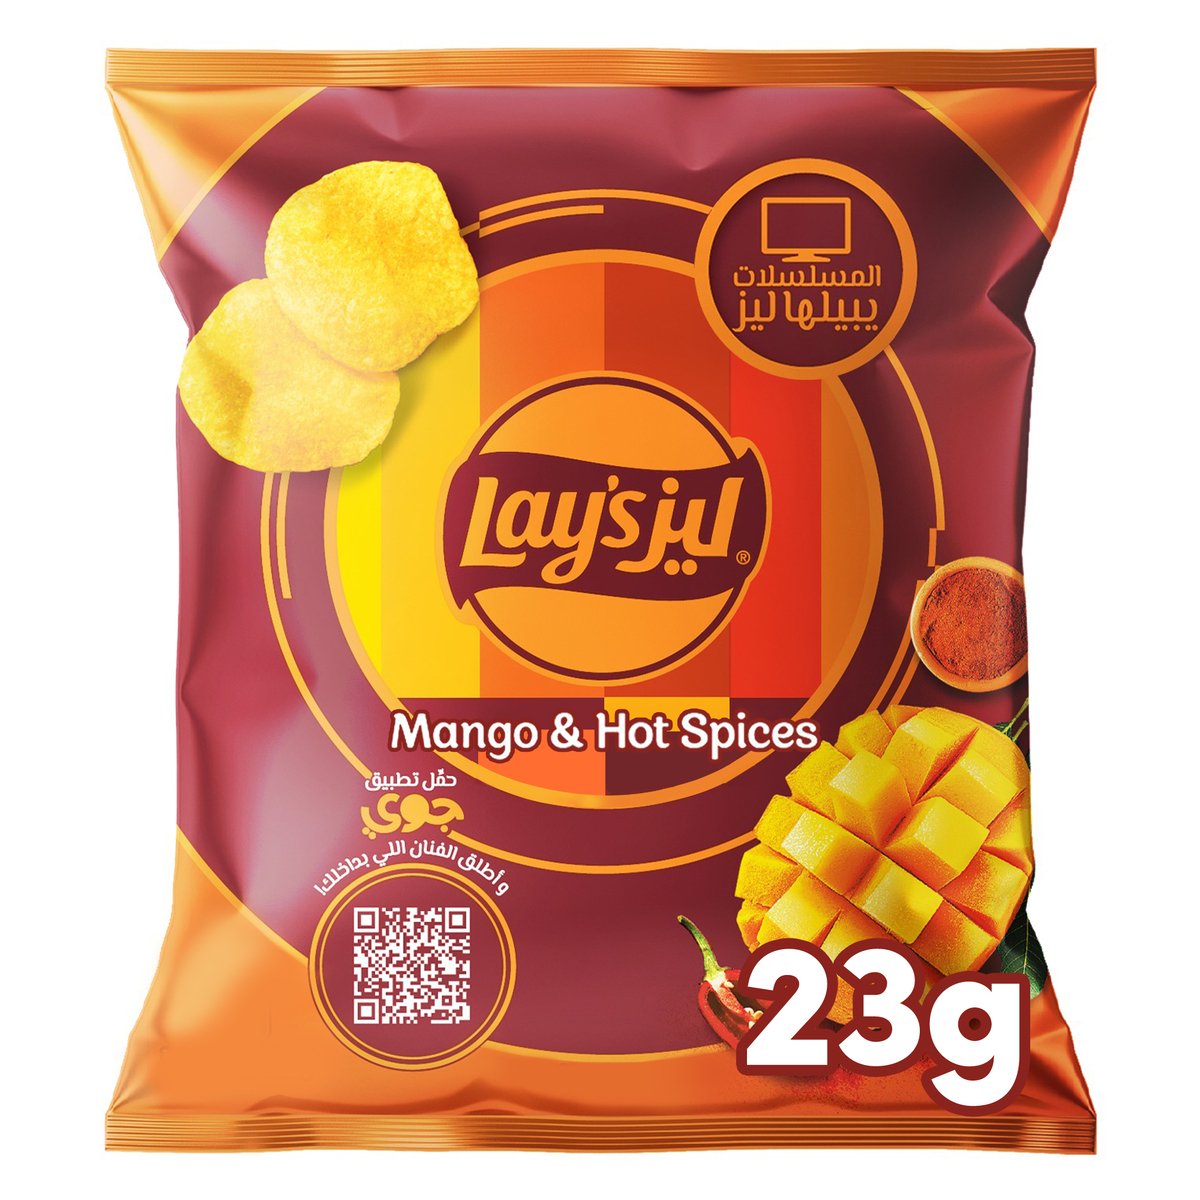 Lay’s Mango & Hot Spices Crispy & Crunchy Snack 23 g